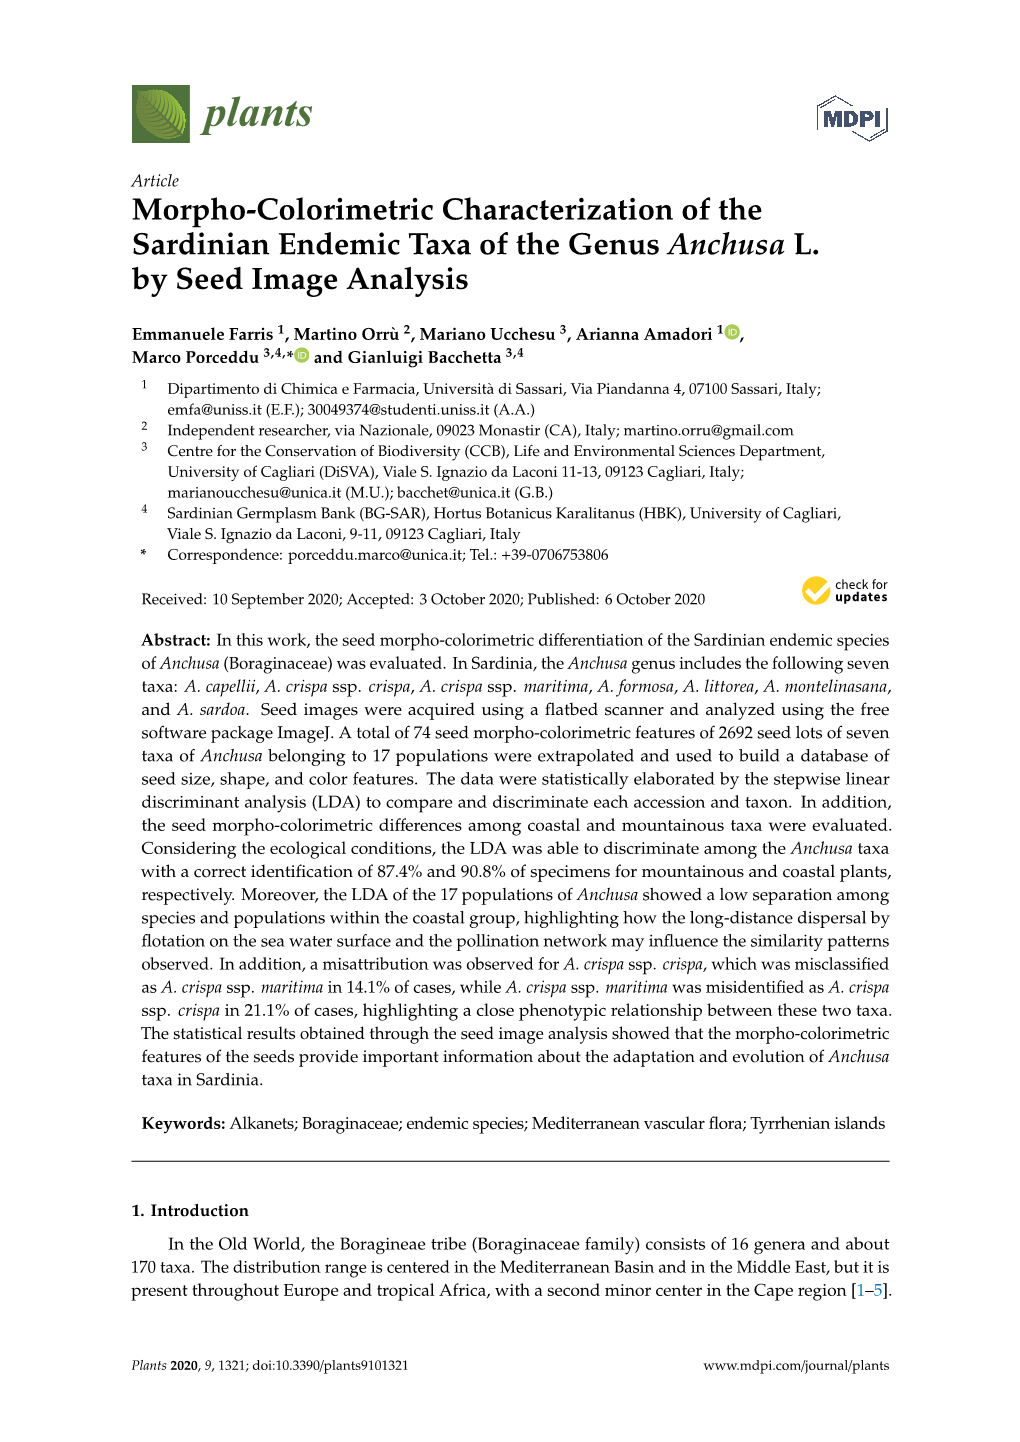 Morpho-Colorimetric Characterization of the Sardinian Endemic Taxa of the Genus Anchusa L